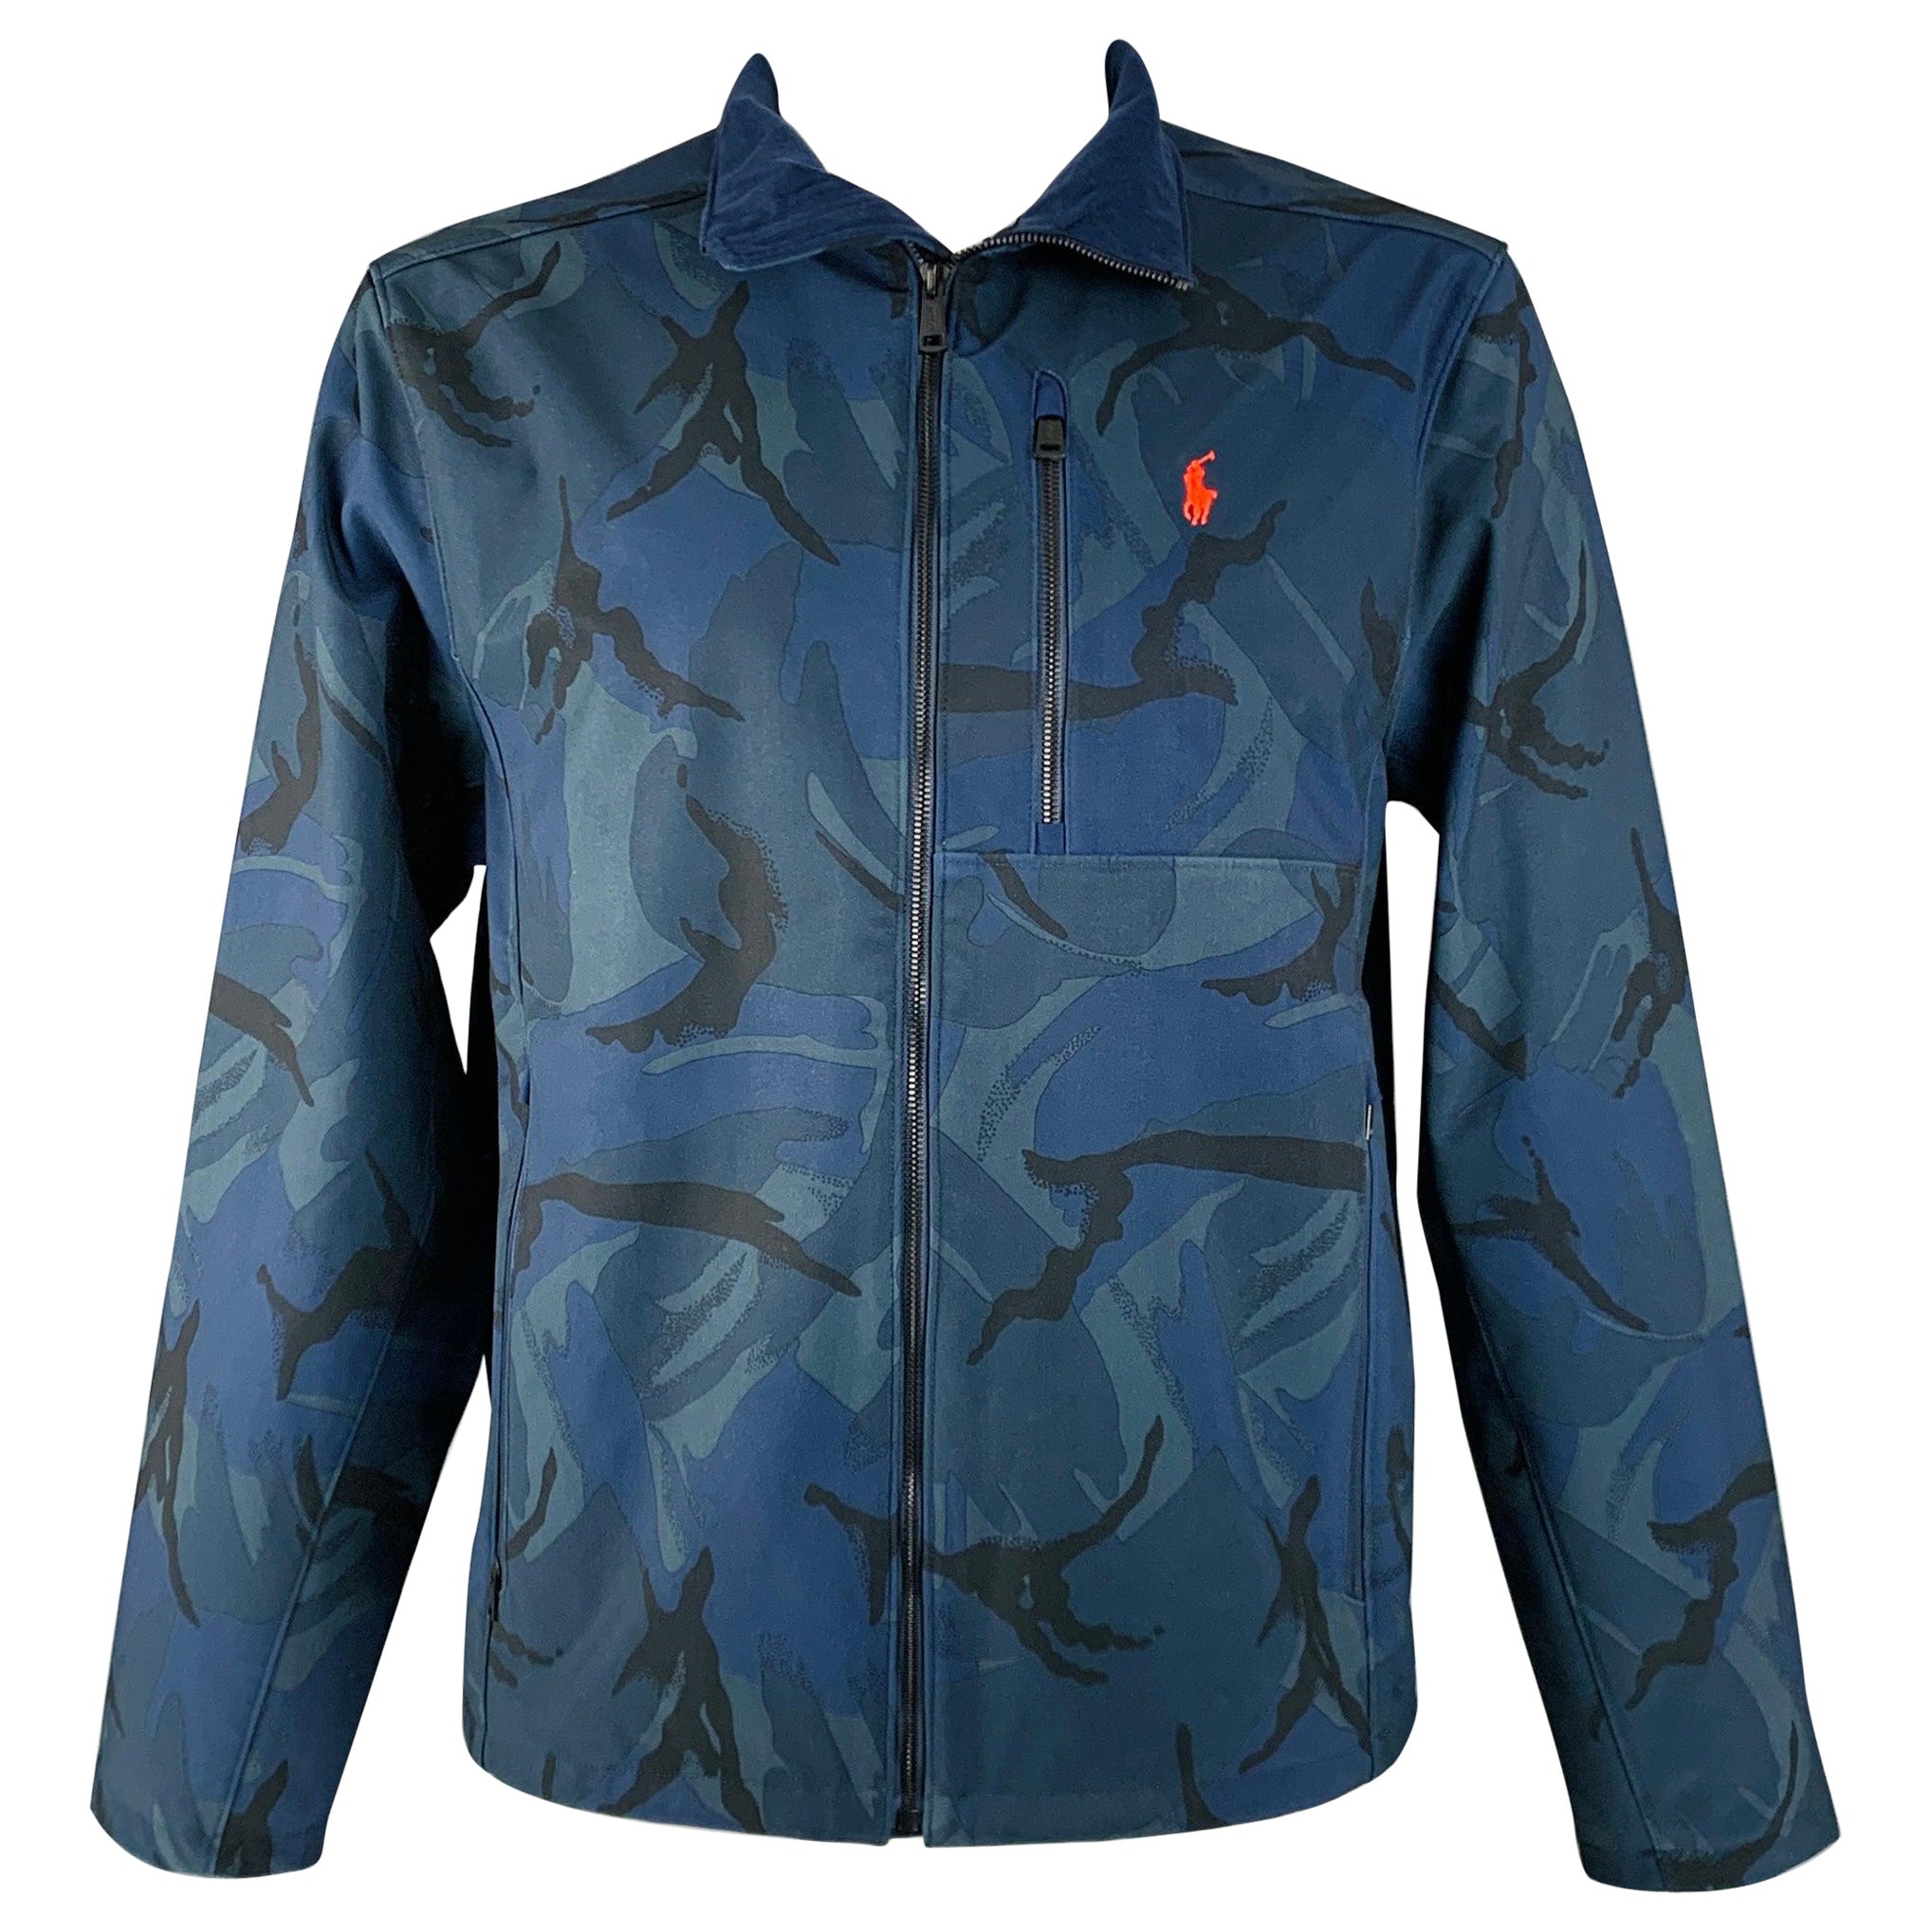 RALPH LAUREN Taille XL Camo bleu marine Veste en polyester élastique en vente